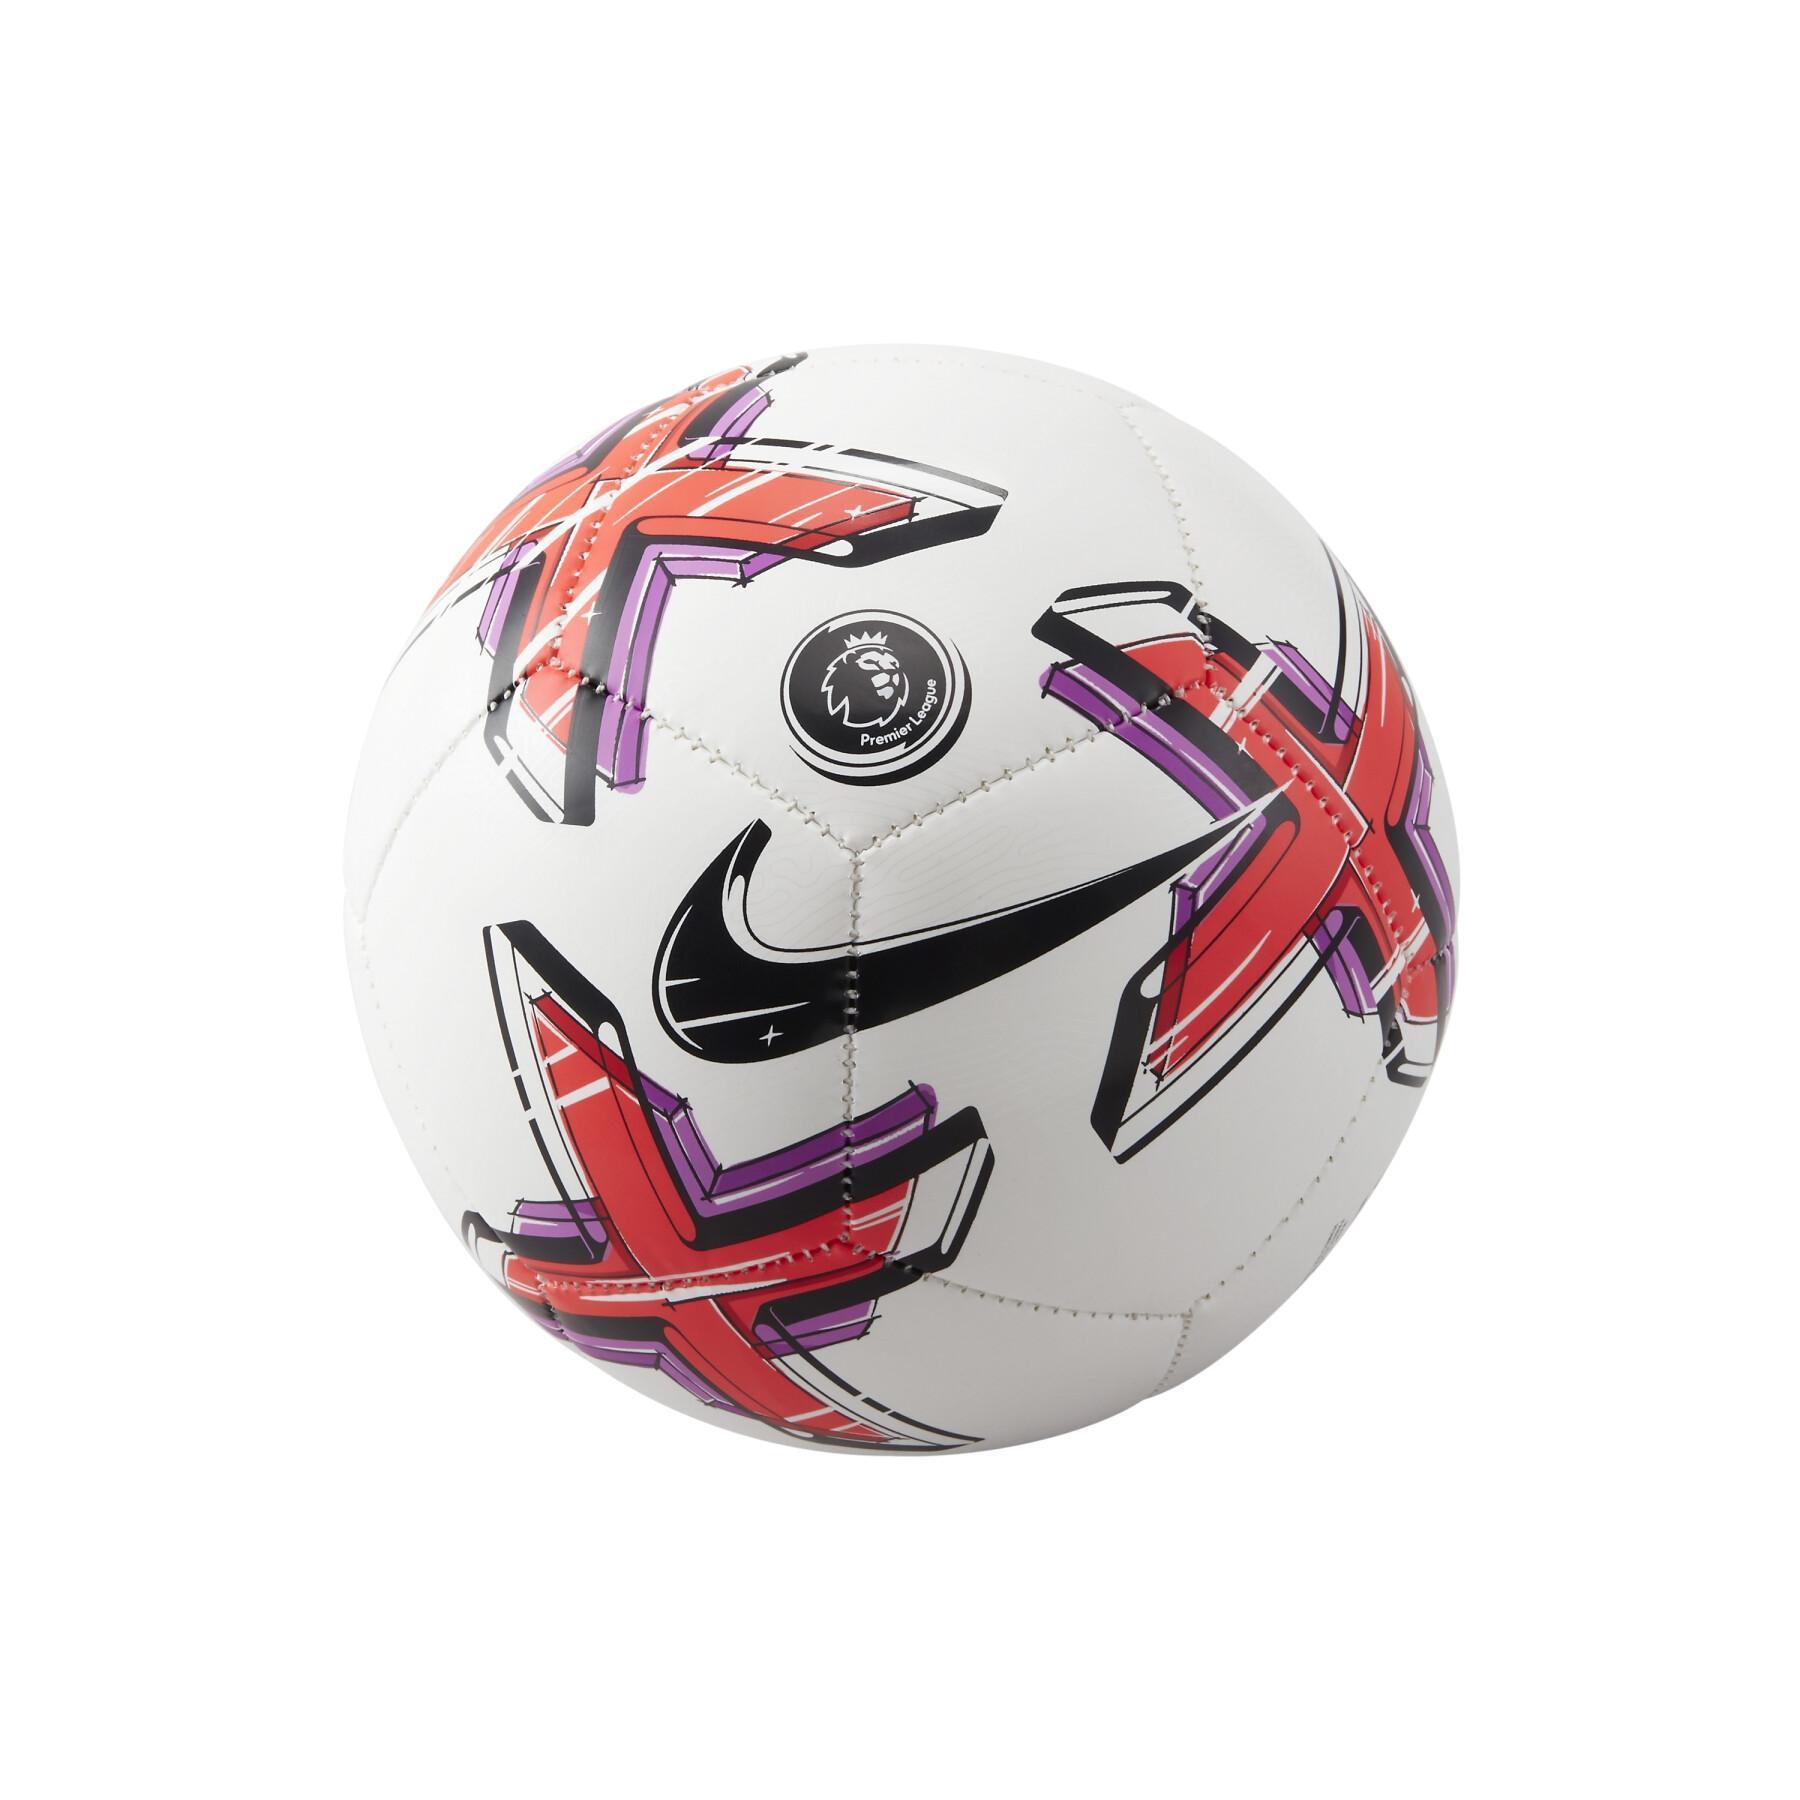 Mini ballon Nike Premier League Skills - Marques - Ballons - Equipements